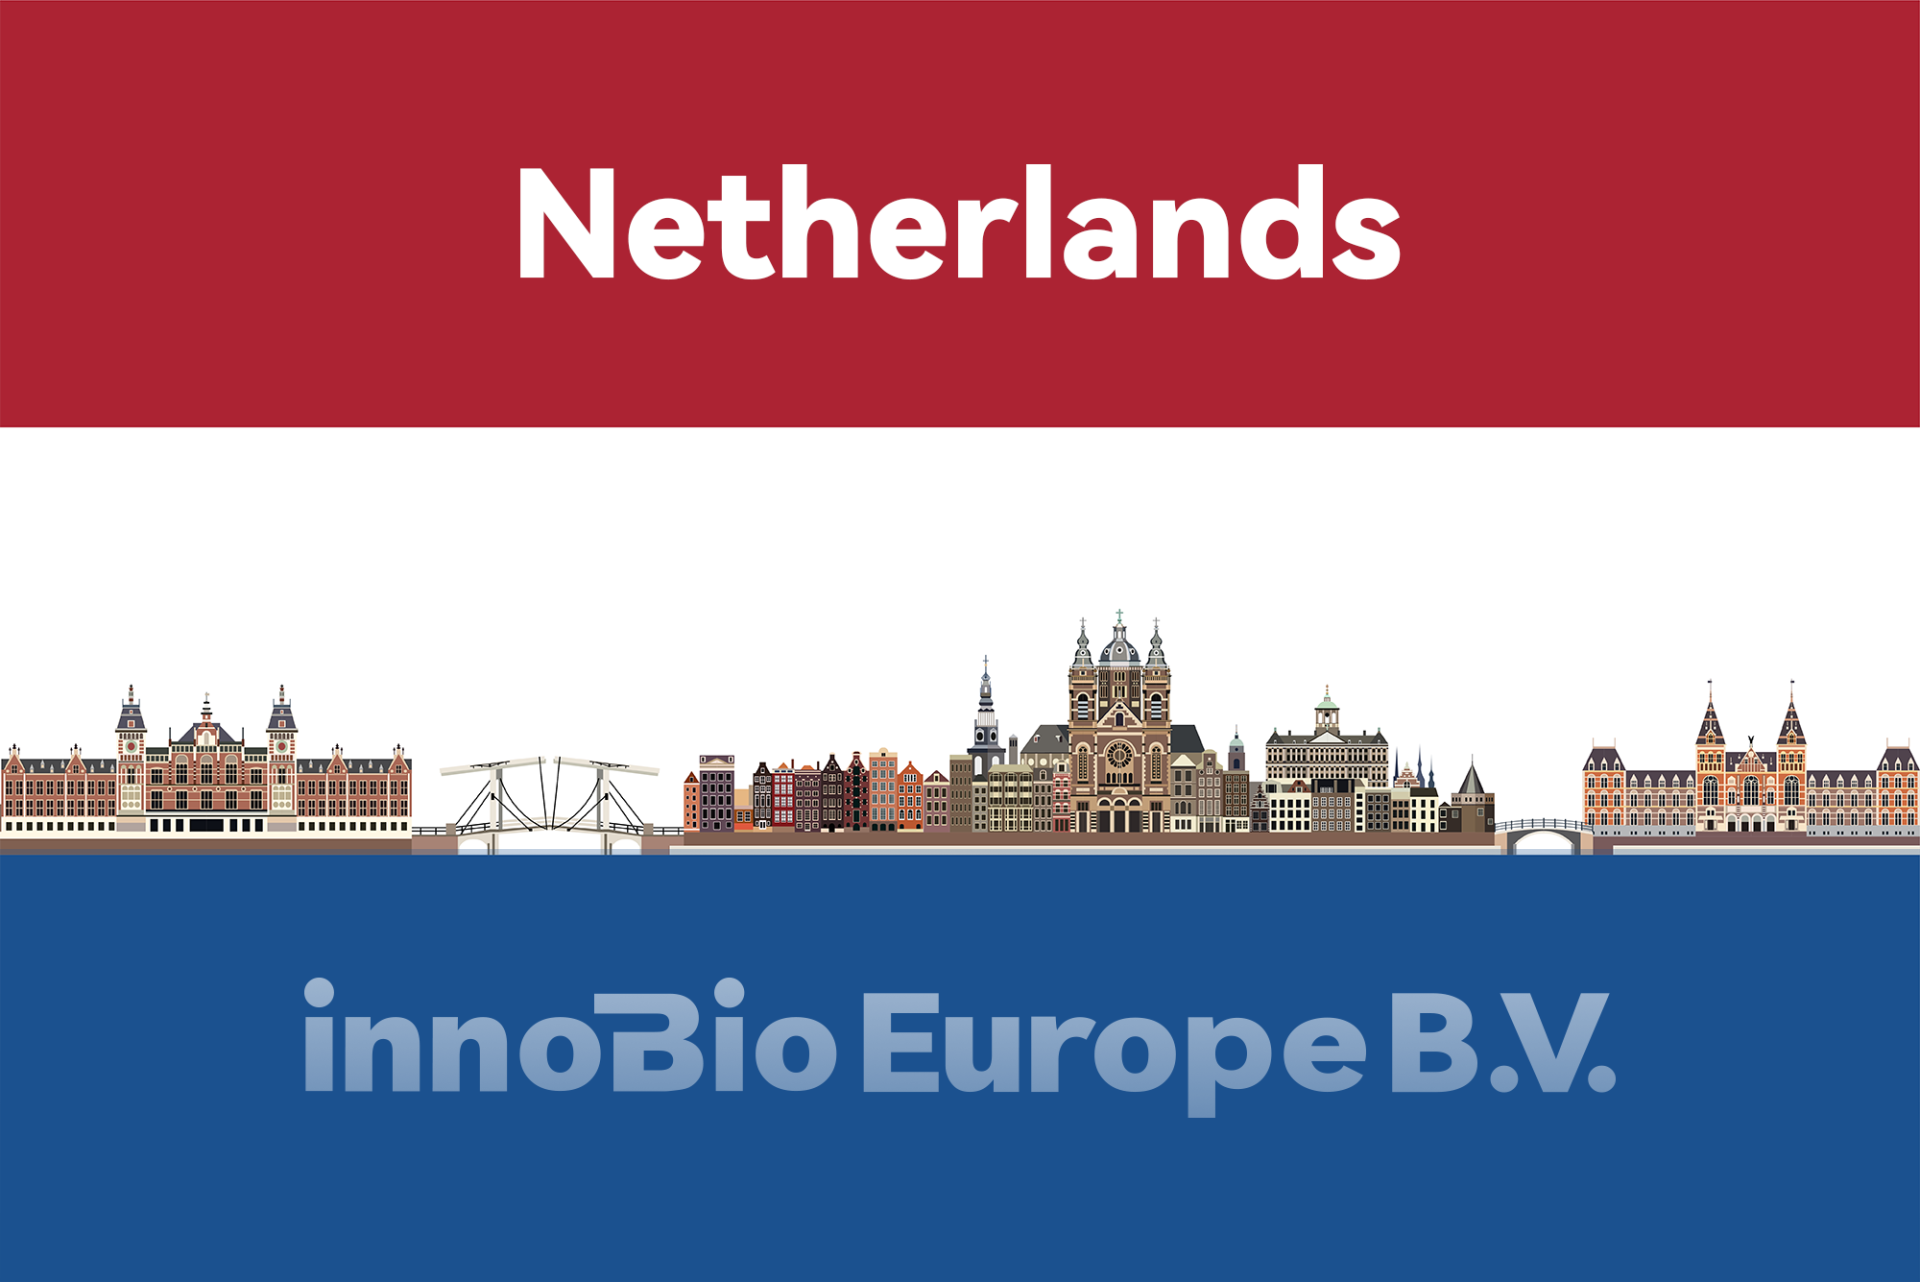 INNOBIO Europe B.V, the European branch of INNOBIO Co., Ltd. was launched in Netherlands.